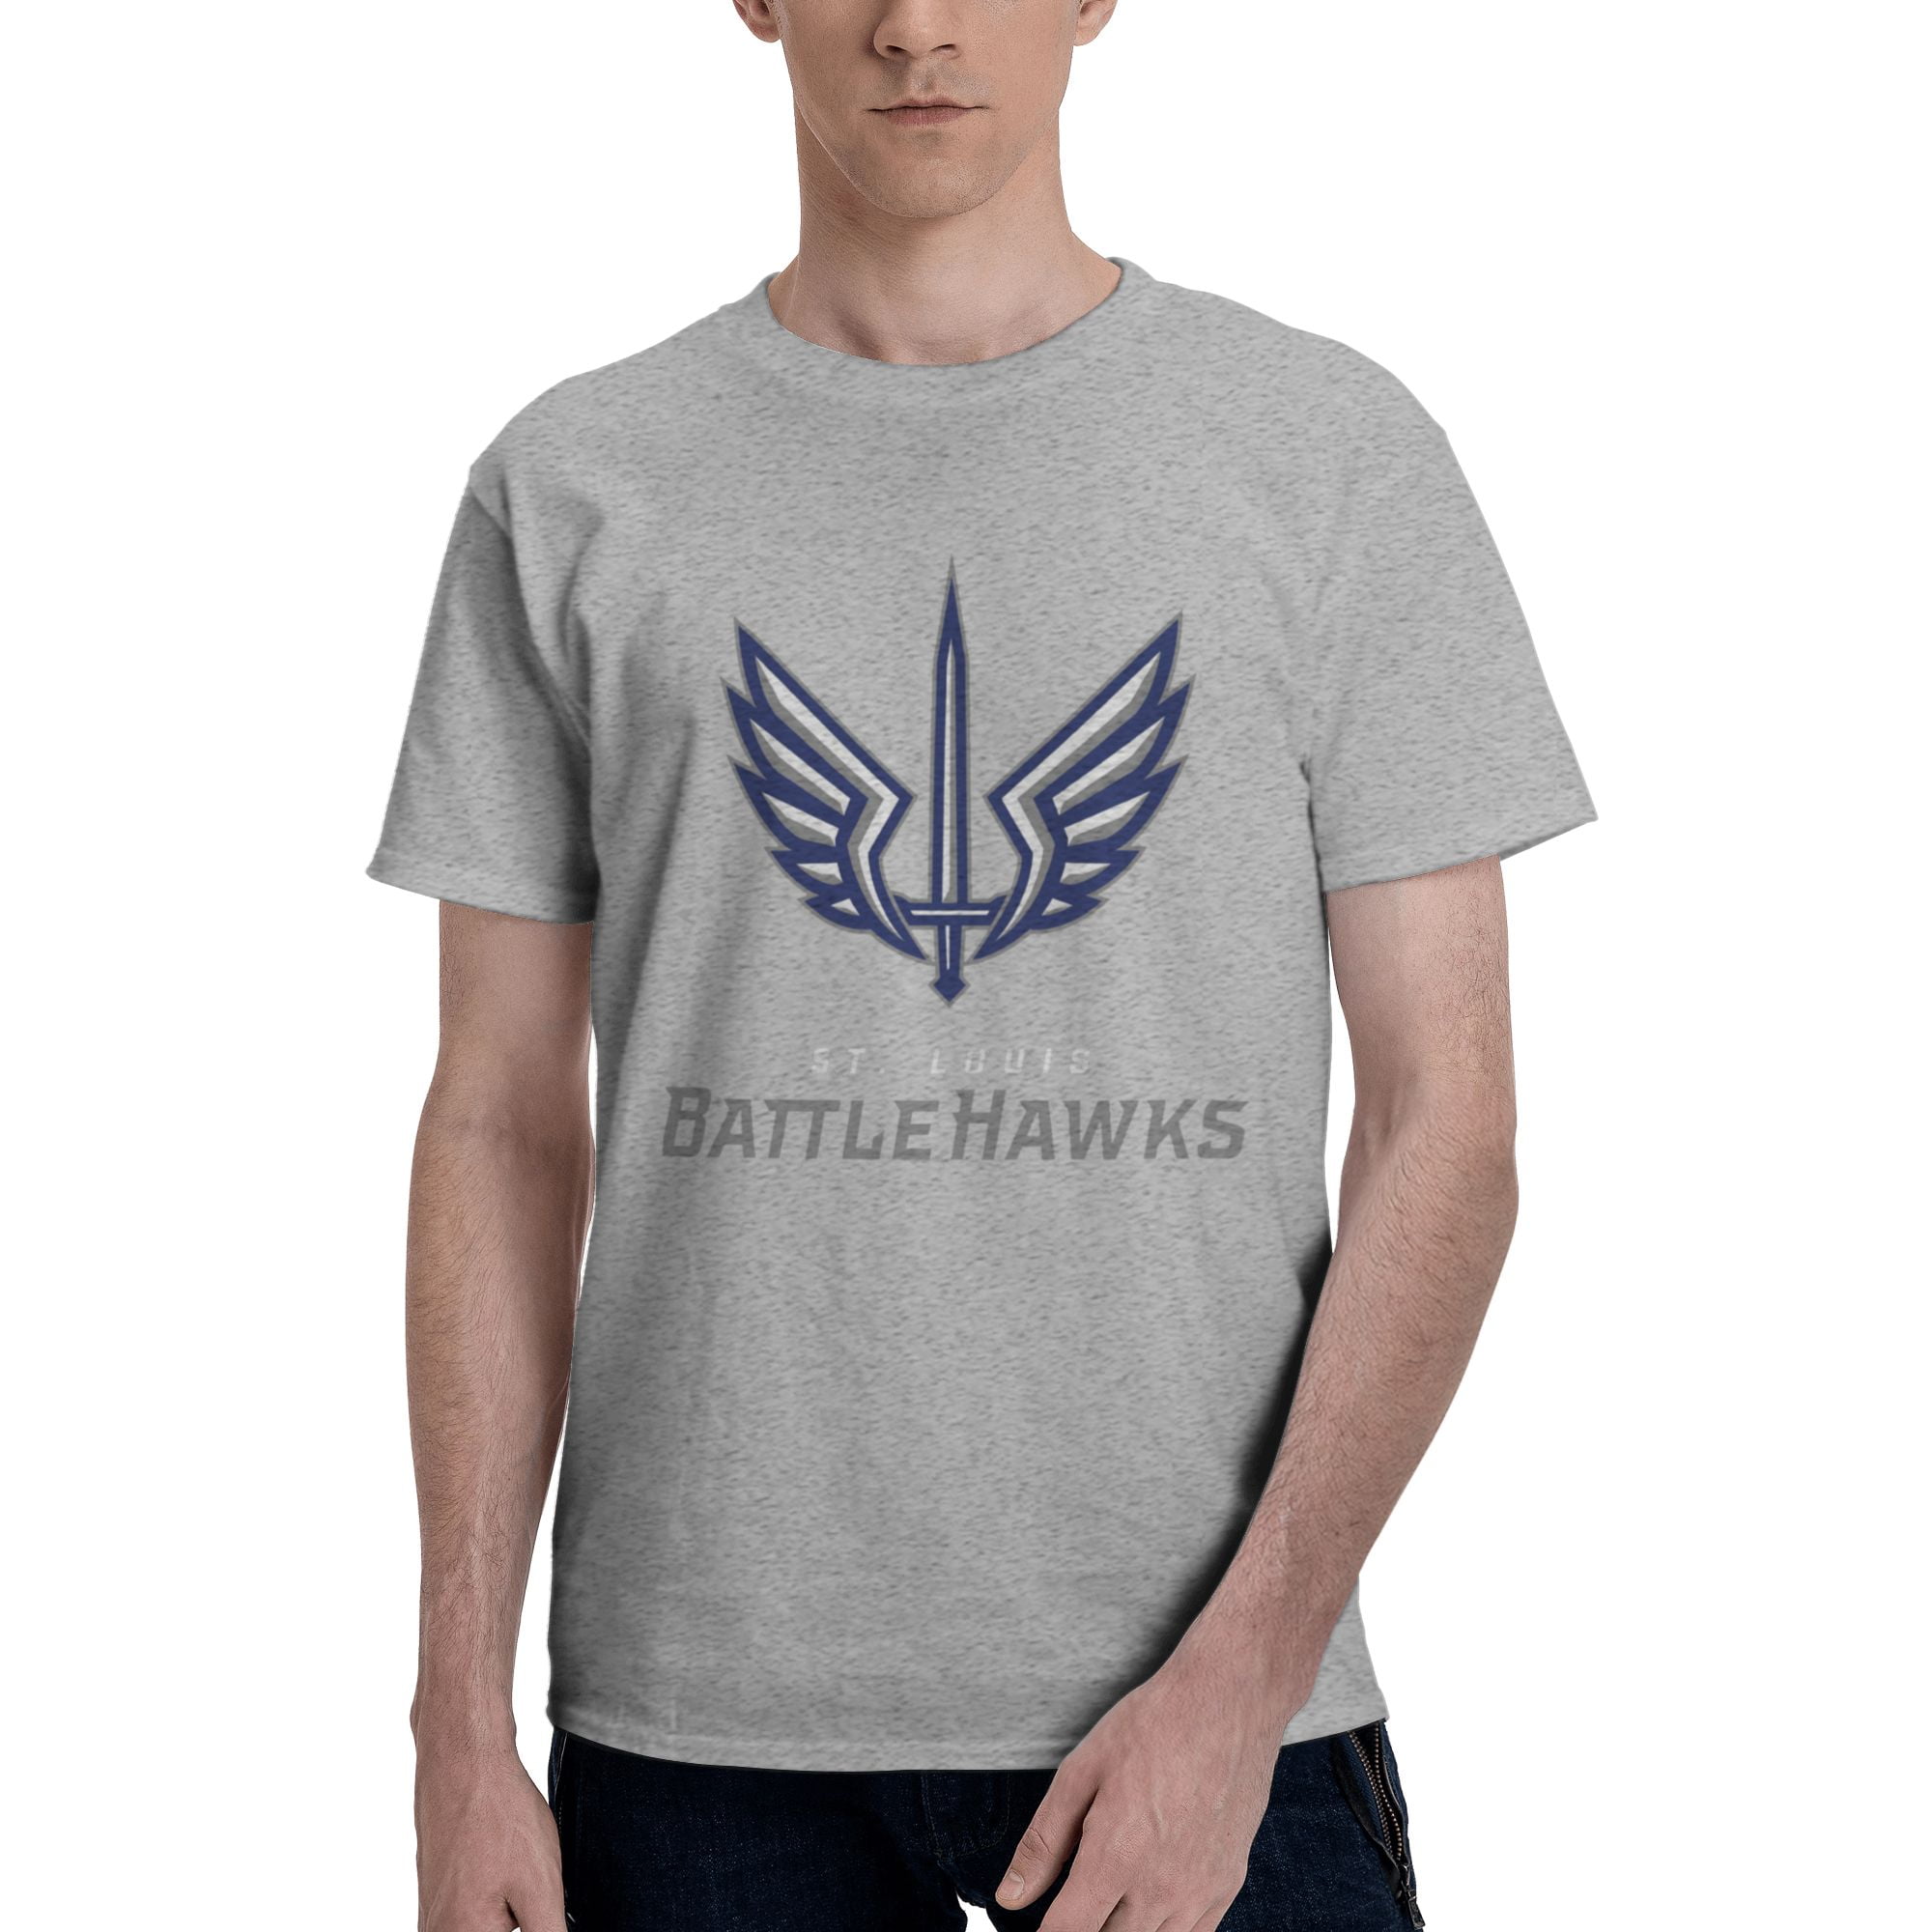 St. Louis BattleHawks Men's Basic Short Sleeve T-Shirt Gray 3X-Large 